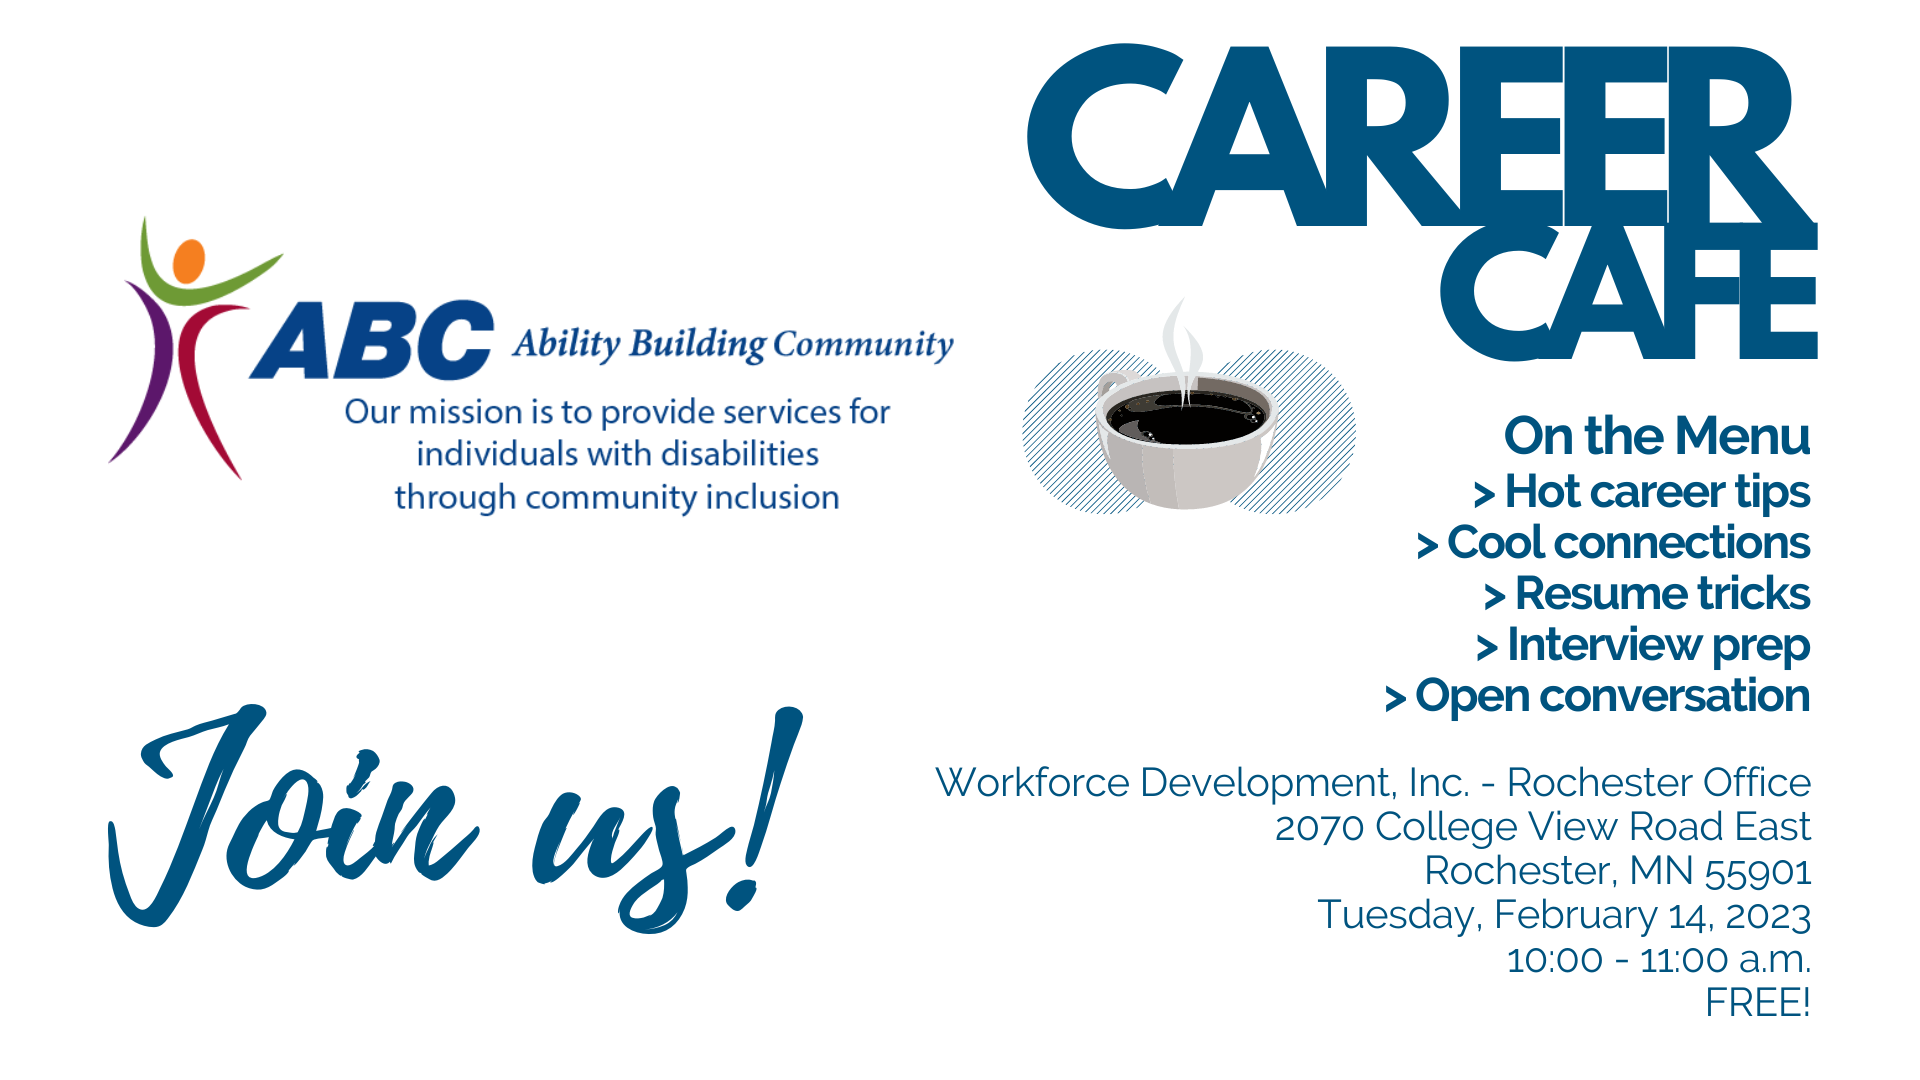 Career Café: Employer Meet & Greet with Ability Building Community (ABC)